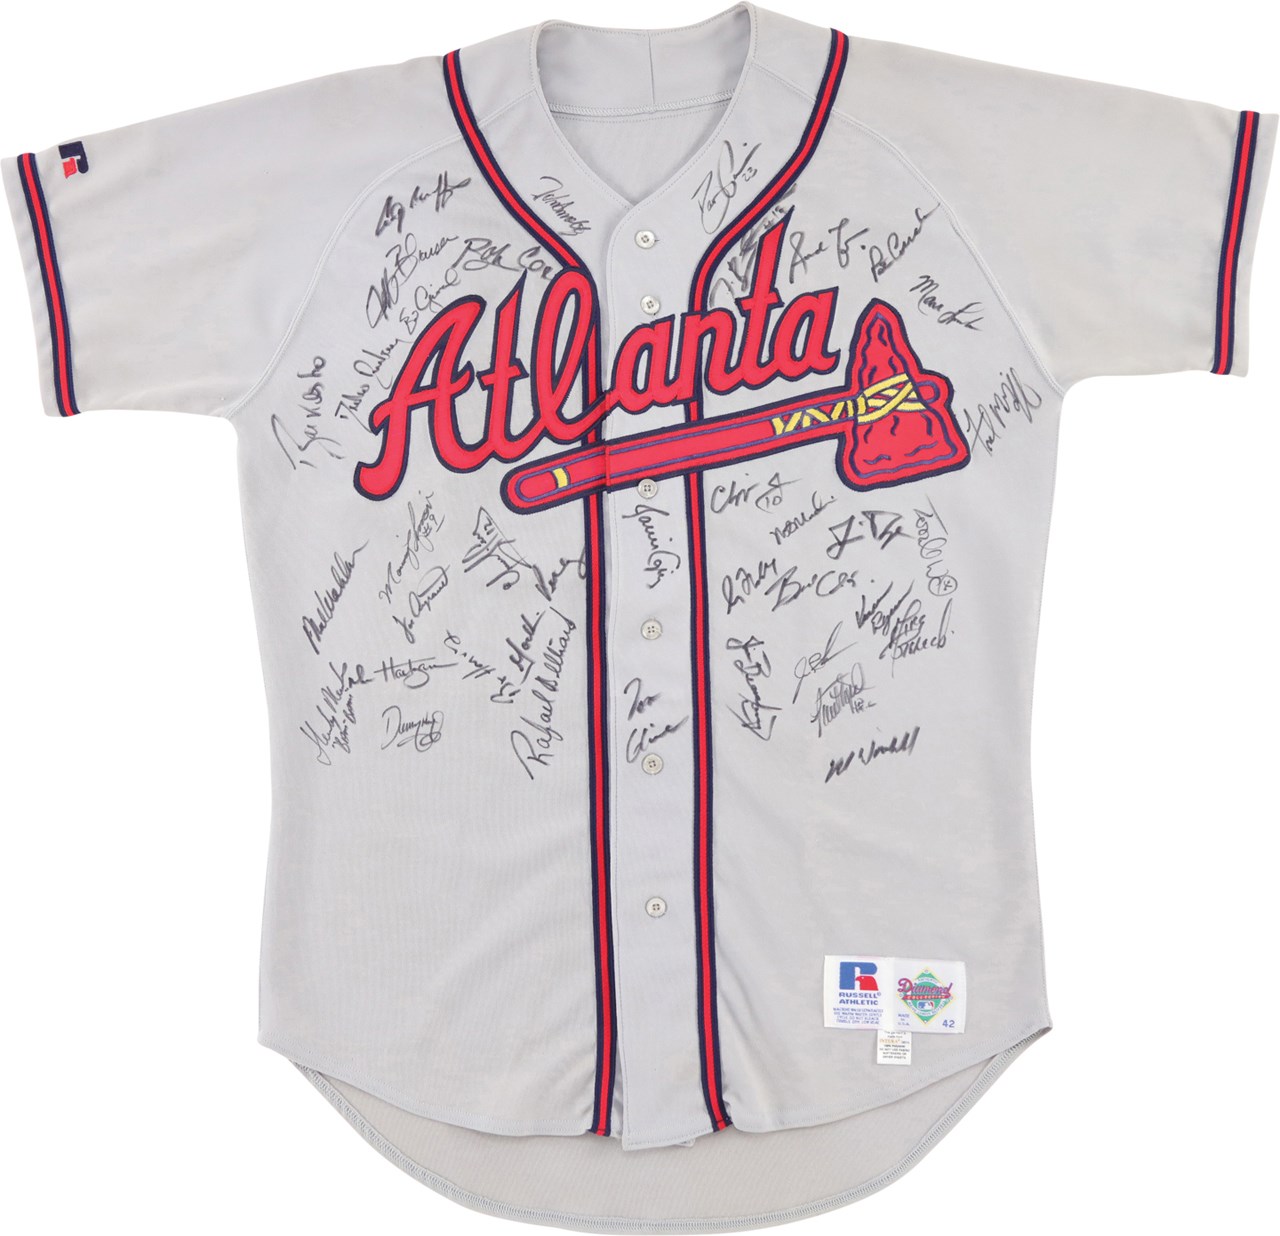 1996 Atlanta Braves Team-Signed Jersey